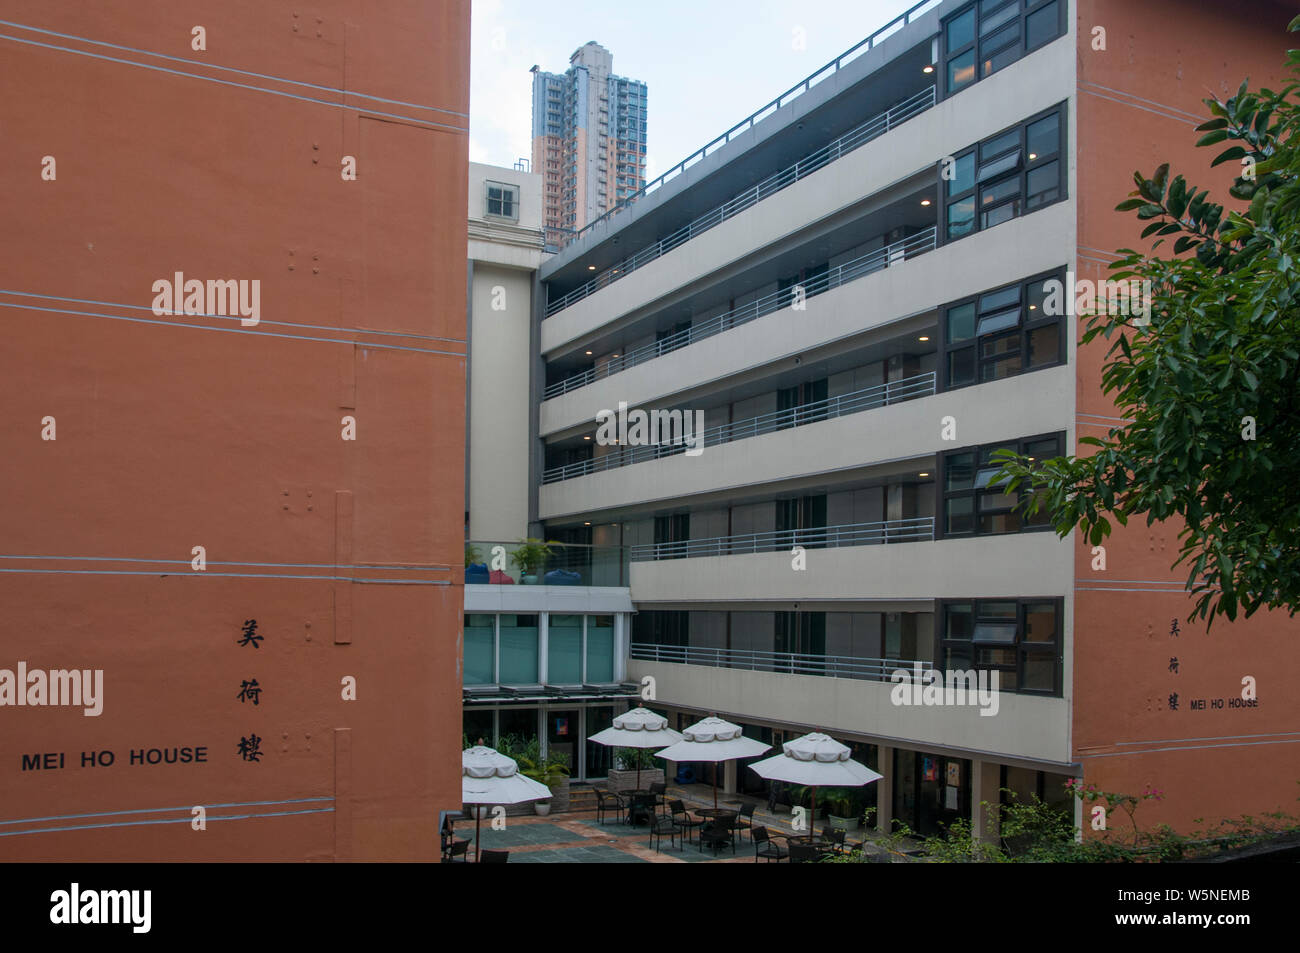 Mei Ho House YHA Hostel, an historic former public housing block, at Sham Shui Po, Kowloon, Hong Kong Stock Photo